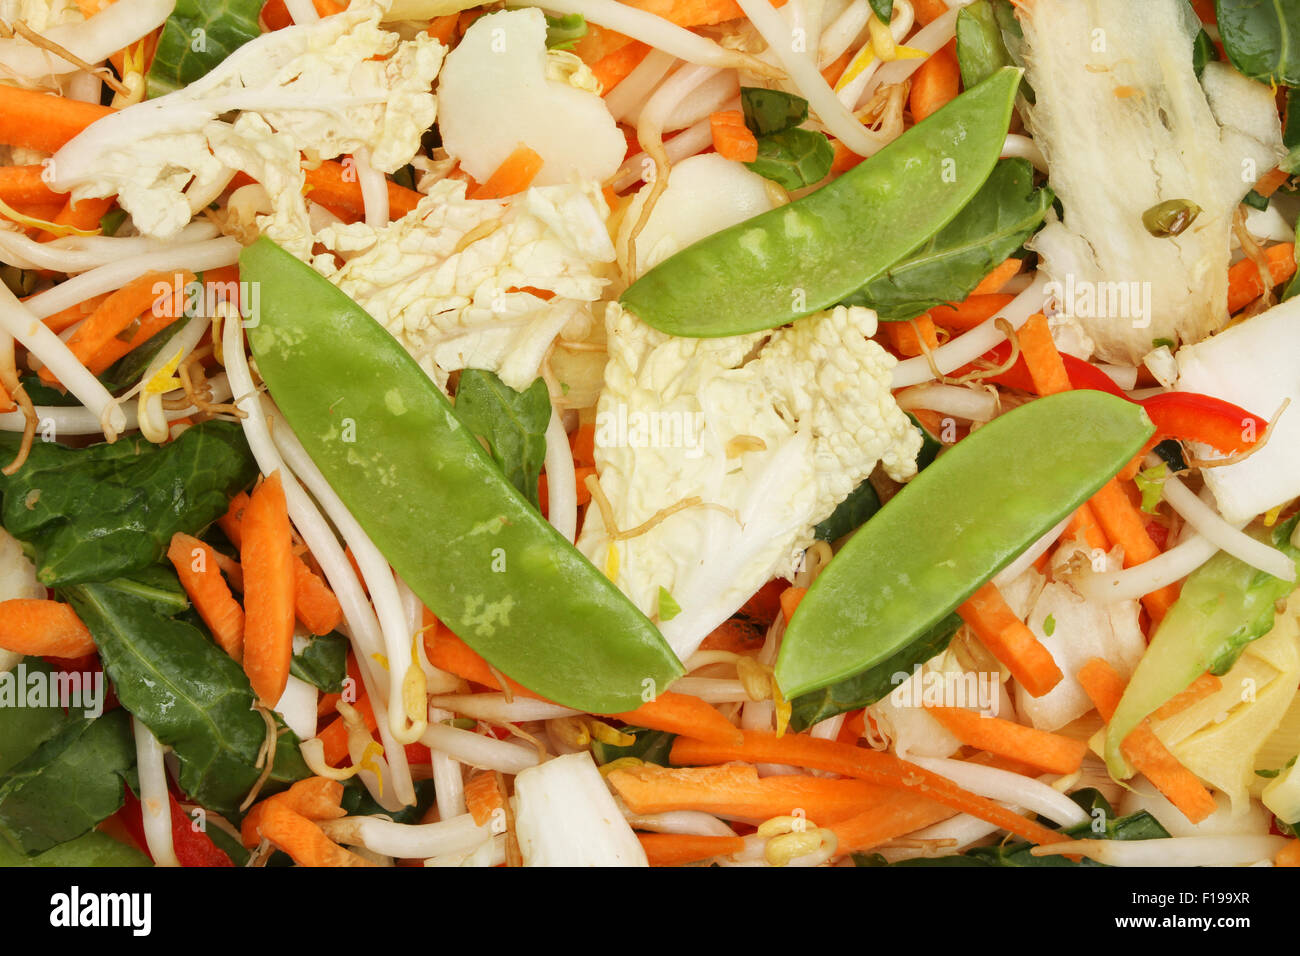 Closeup of raw stir fry vegetables Stock Photo